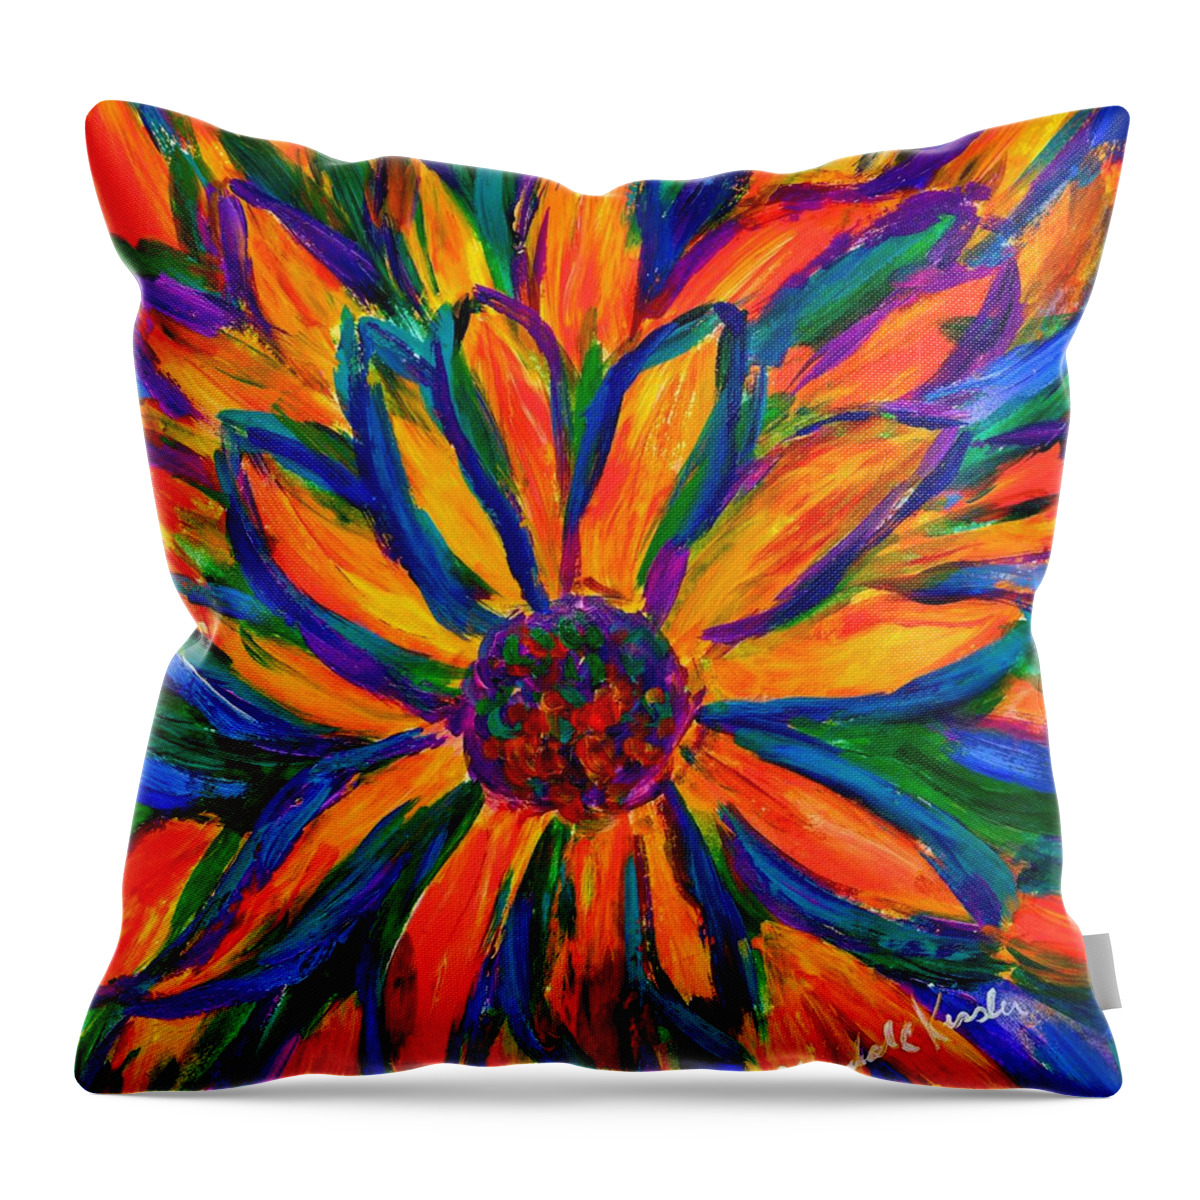 Sunflower Throw Pillow featuring the painting Sunflower Burst by Kendall Kessler